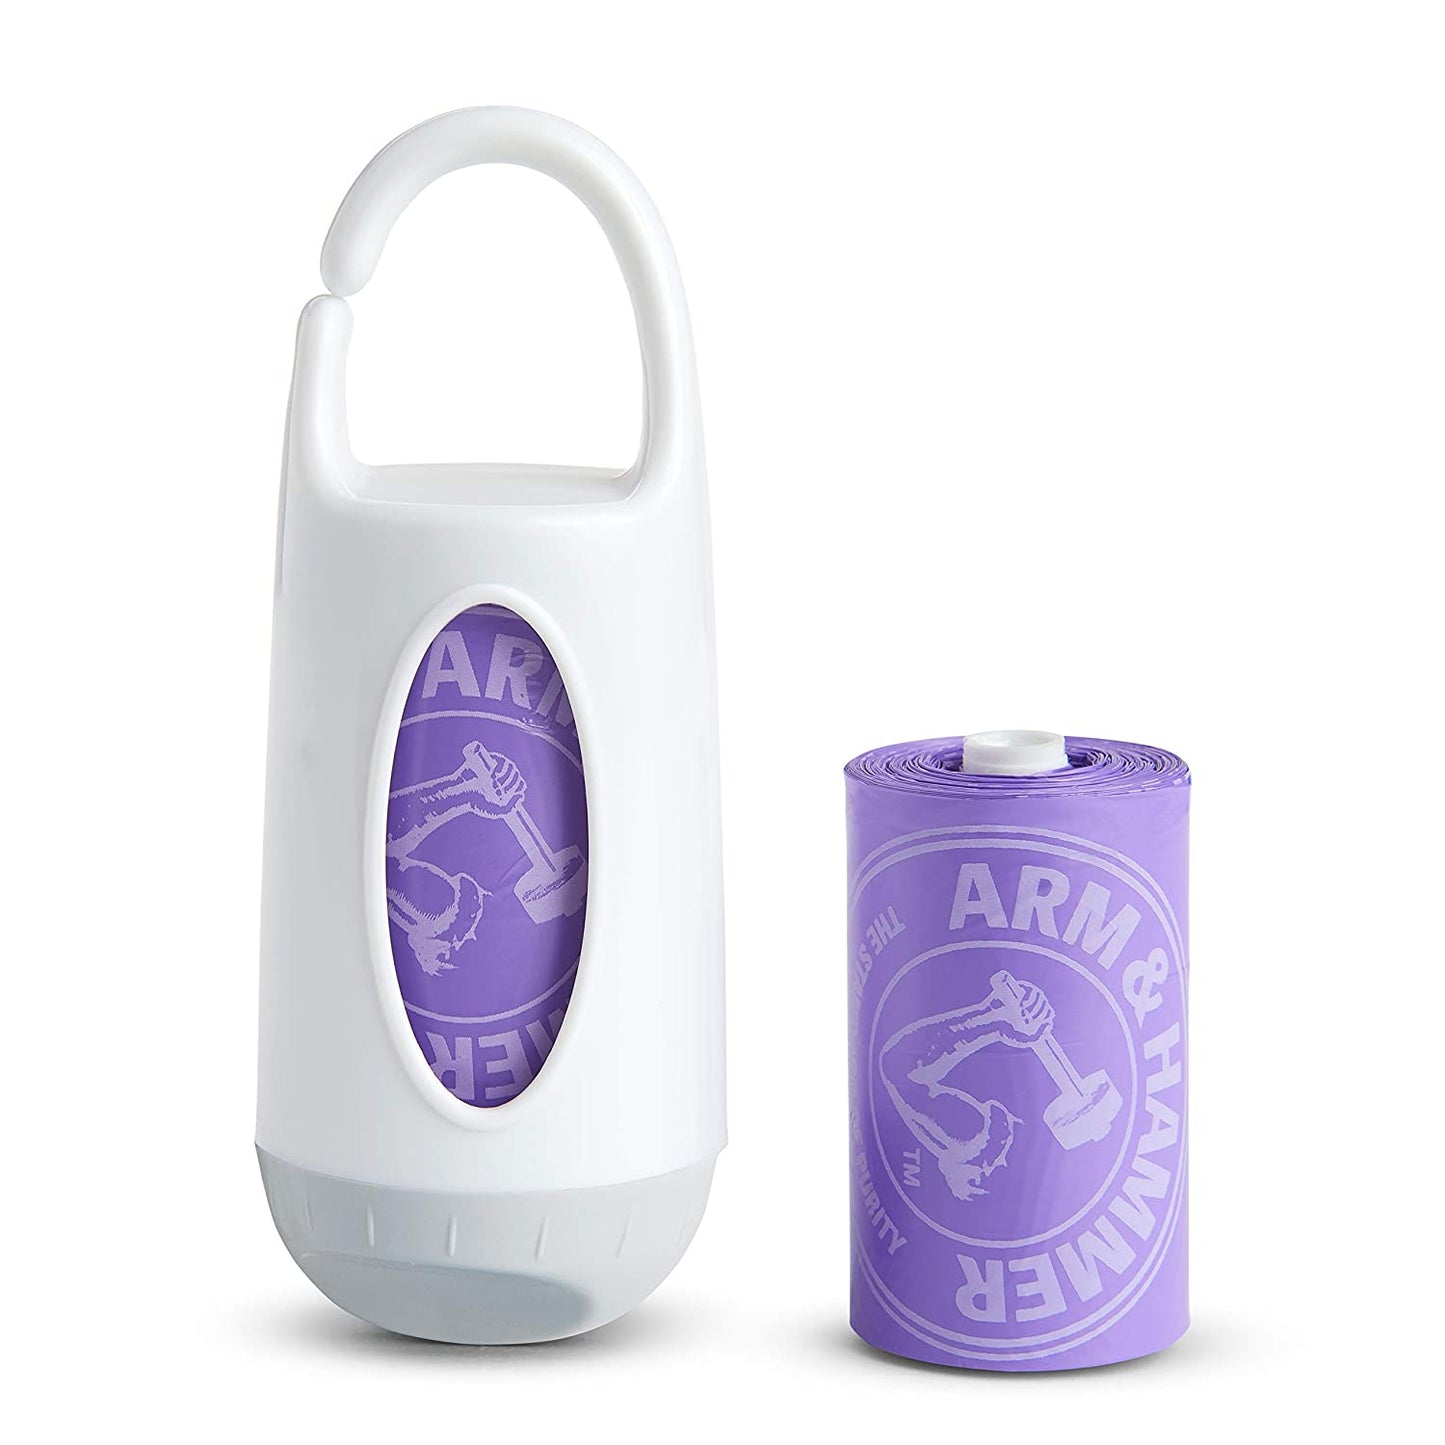 Arm and Hammer Diaper Bag Dispenser and Diaper Disposal Bags